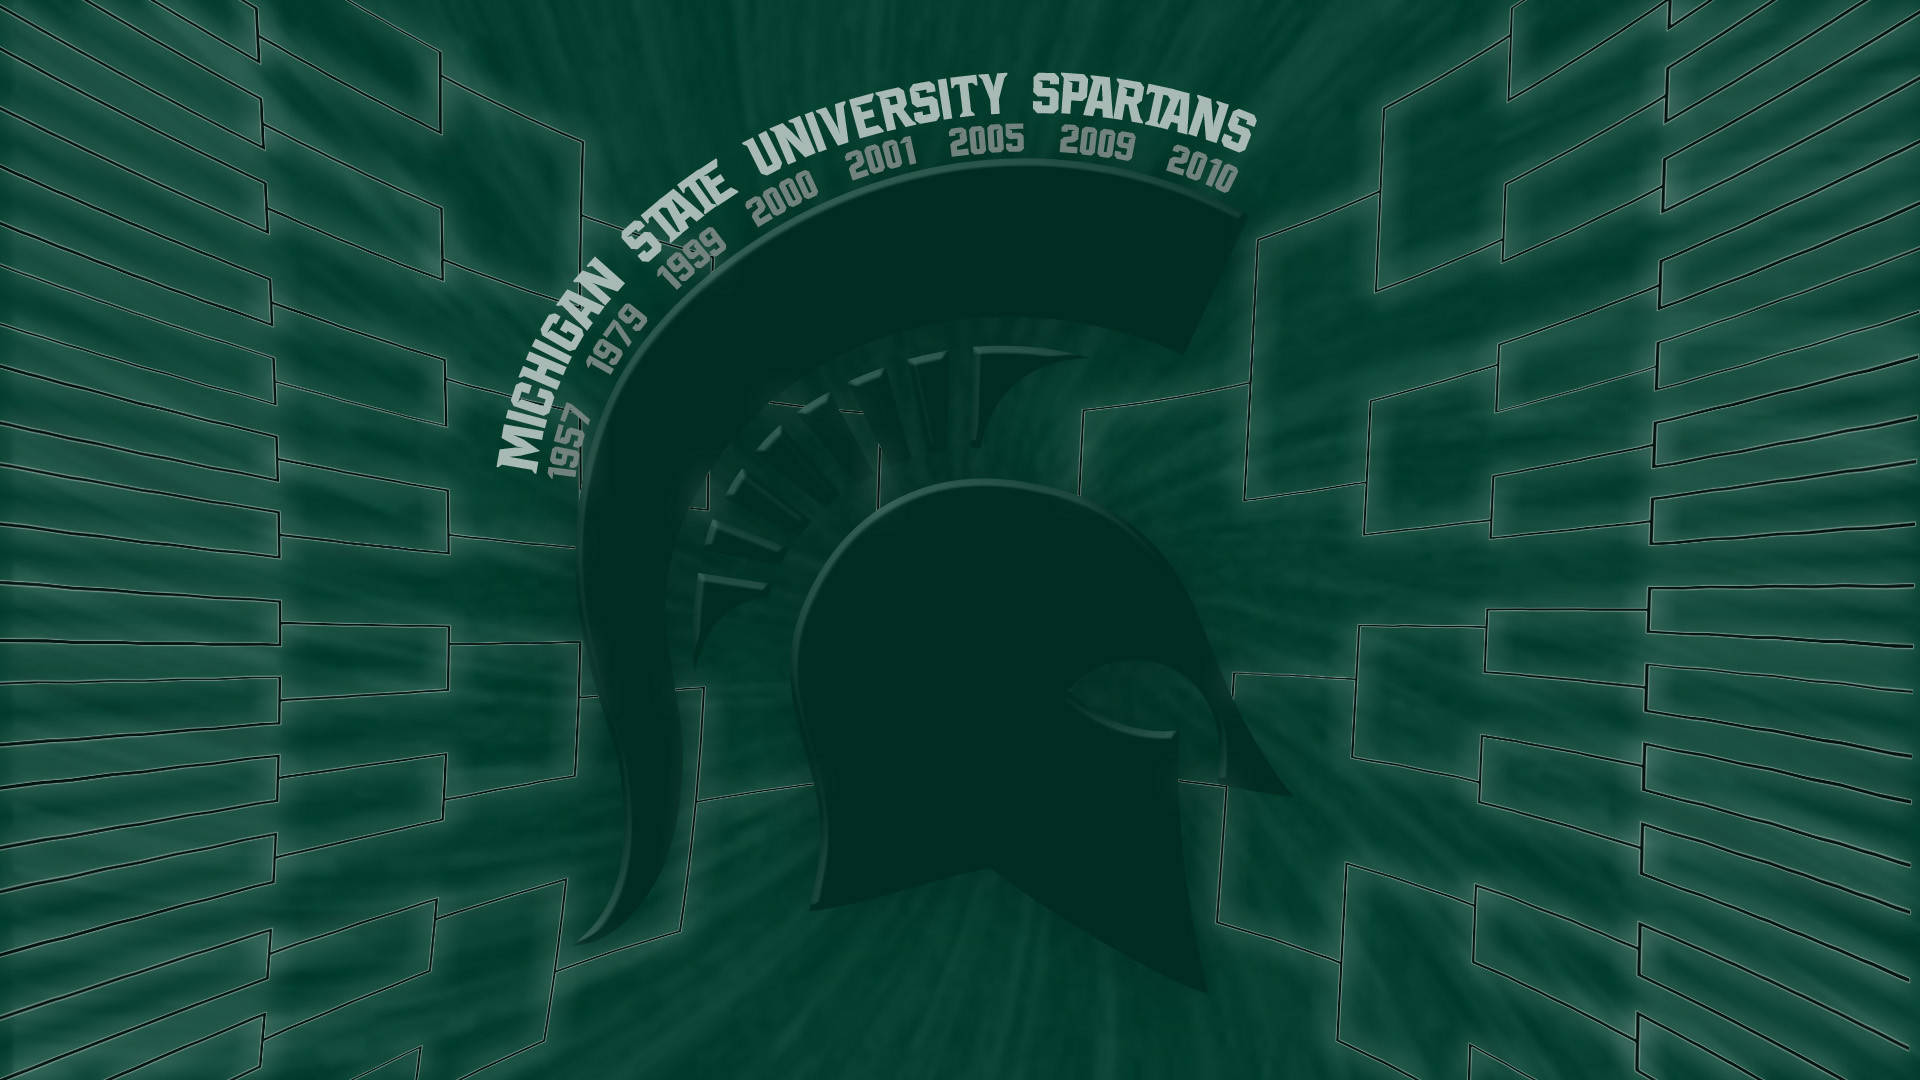 Logotipode La Universidad Estatal De Michigan En Fondo De Pantalla Para Computadora O Móvil. Fondo de pantalla